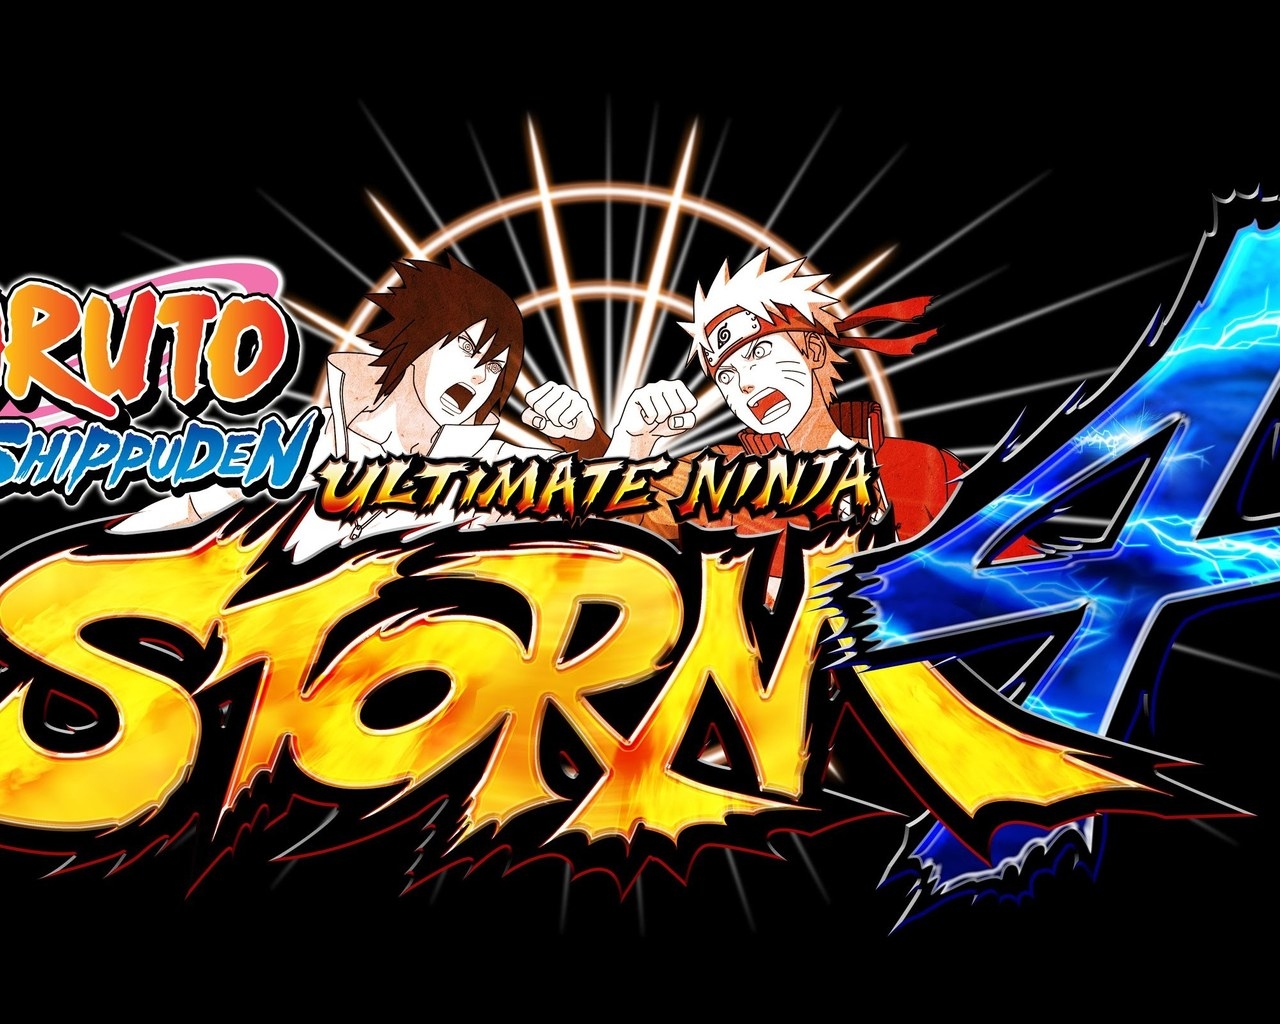 Naruto Shippuden Ultimate Ninja Storm 4 Poster for 1280 x 1024 resolution